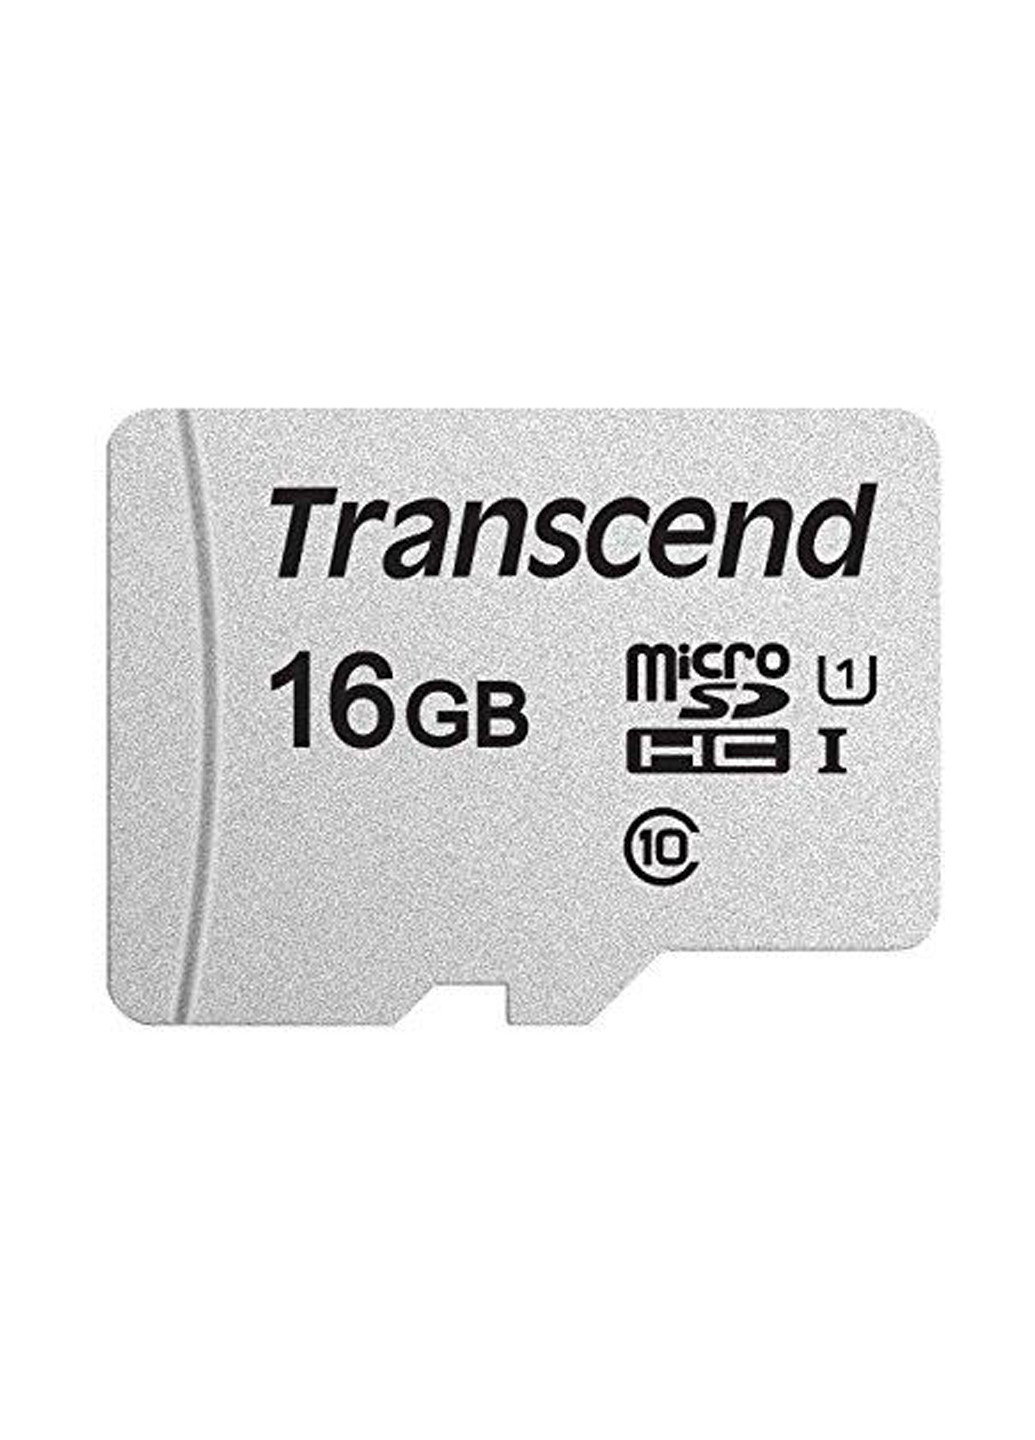 Карта пам'яті microSDHC 16GB C10 UHS-I (R95 / W45MB / s) (TS16GUSD300S) Transcend карта памяти transcend microsdhc 16gb c10 uhs-i (r95/w45mb/s) (ts16gusd300s) (130843200)